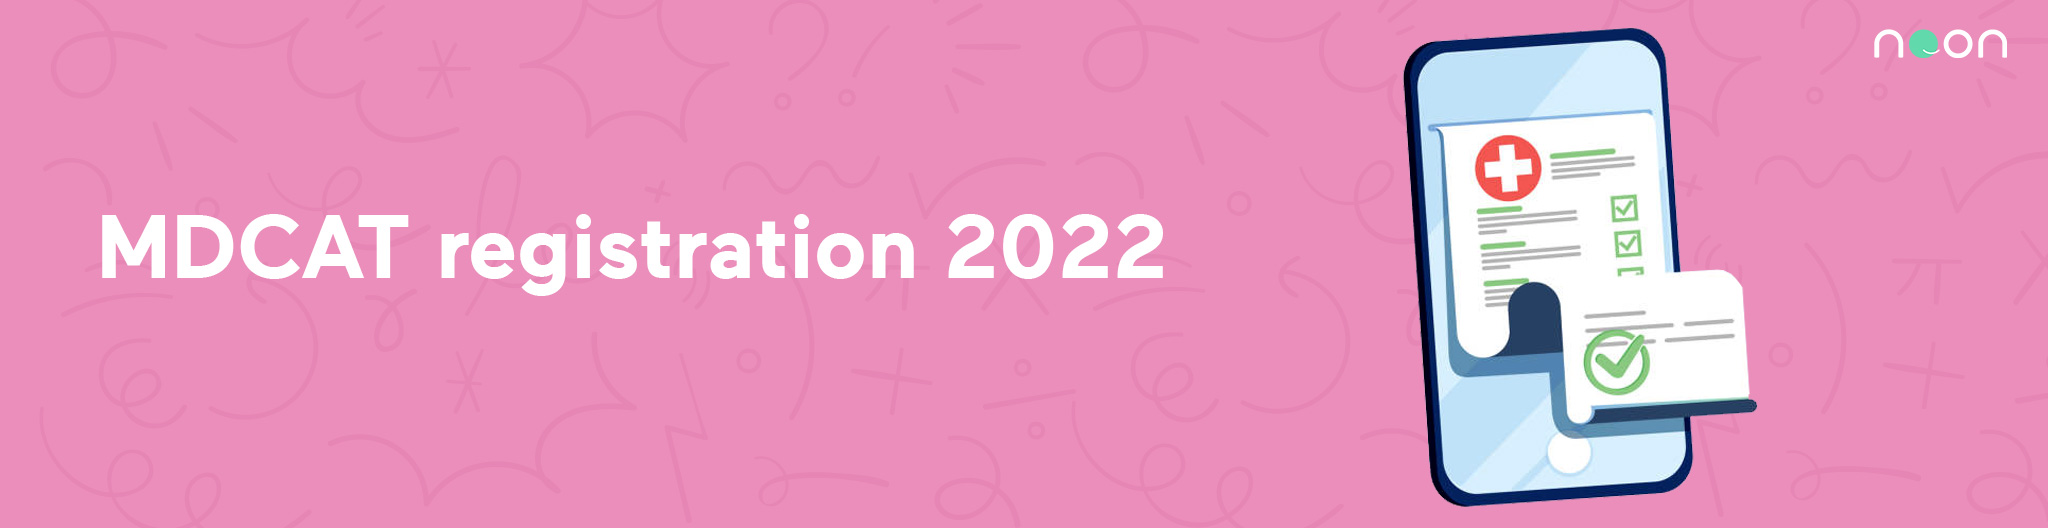 MDCAT registration 2022